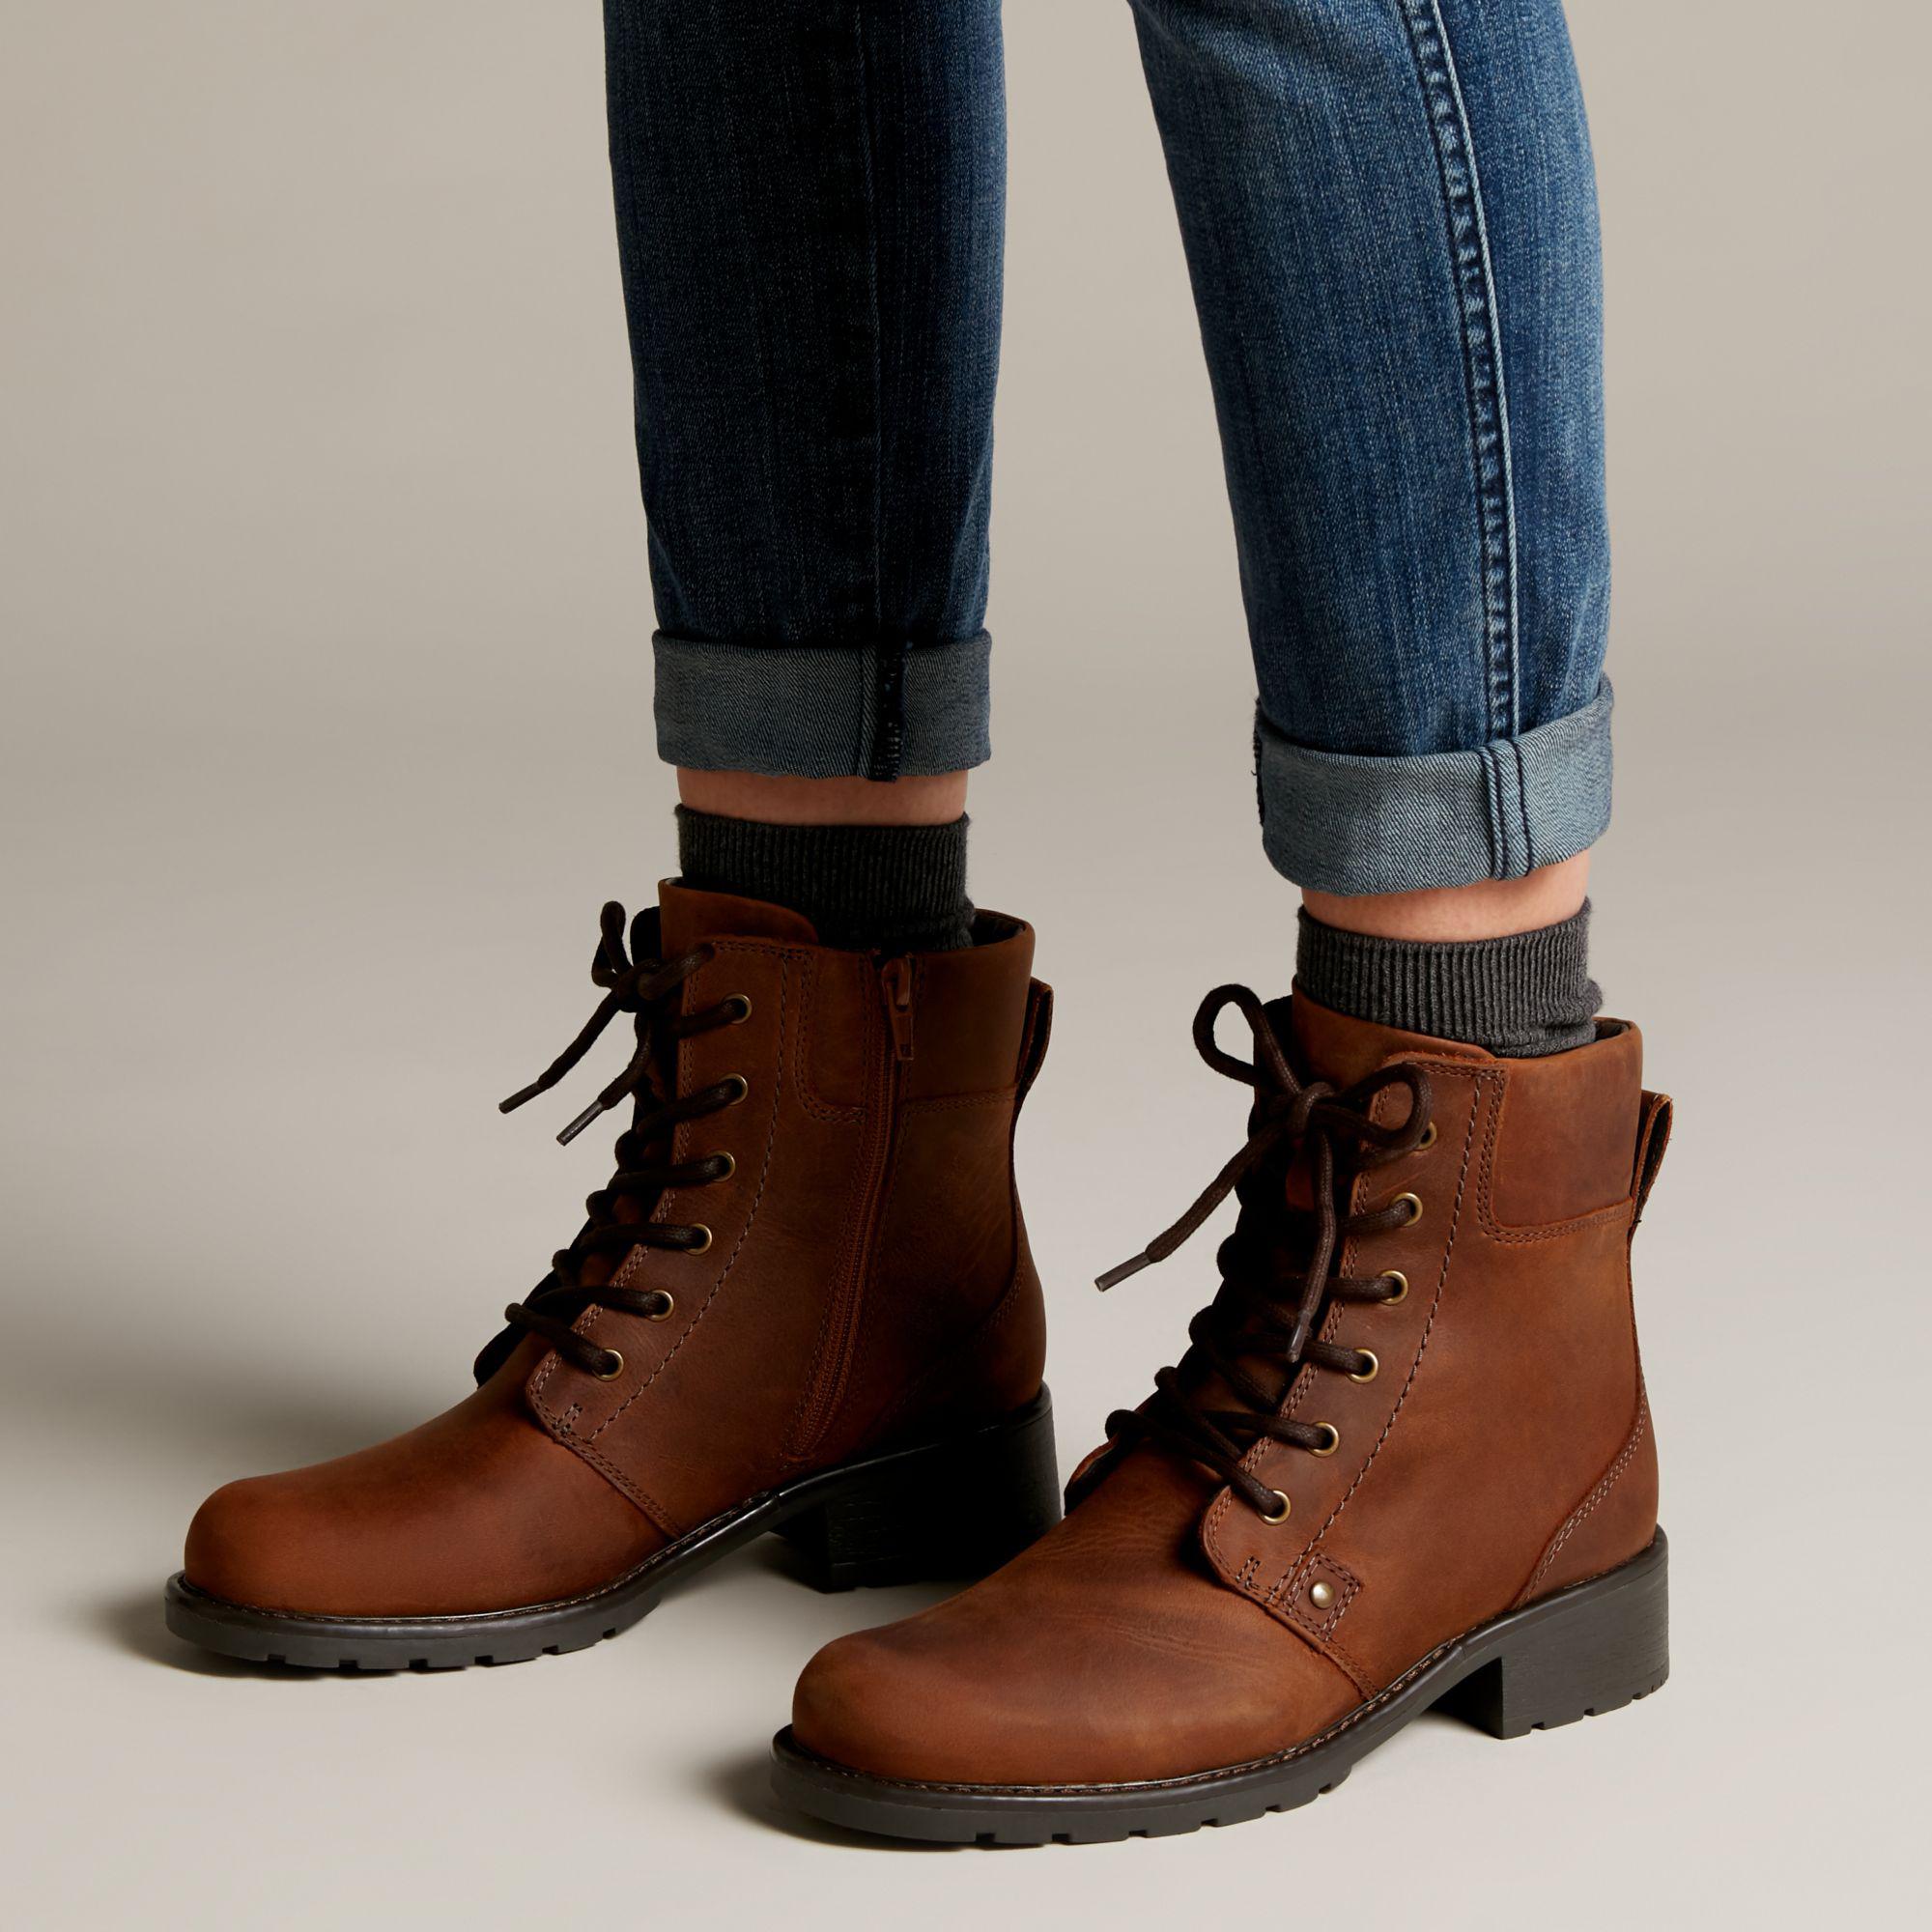 orinoco spice women's boots